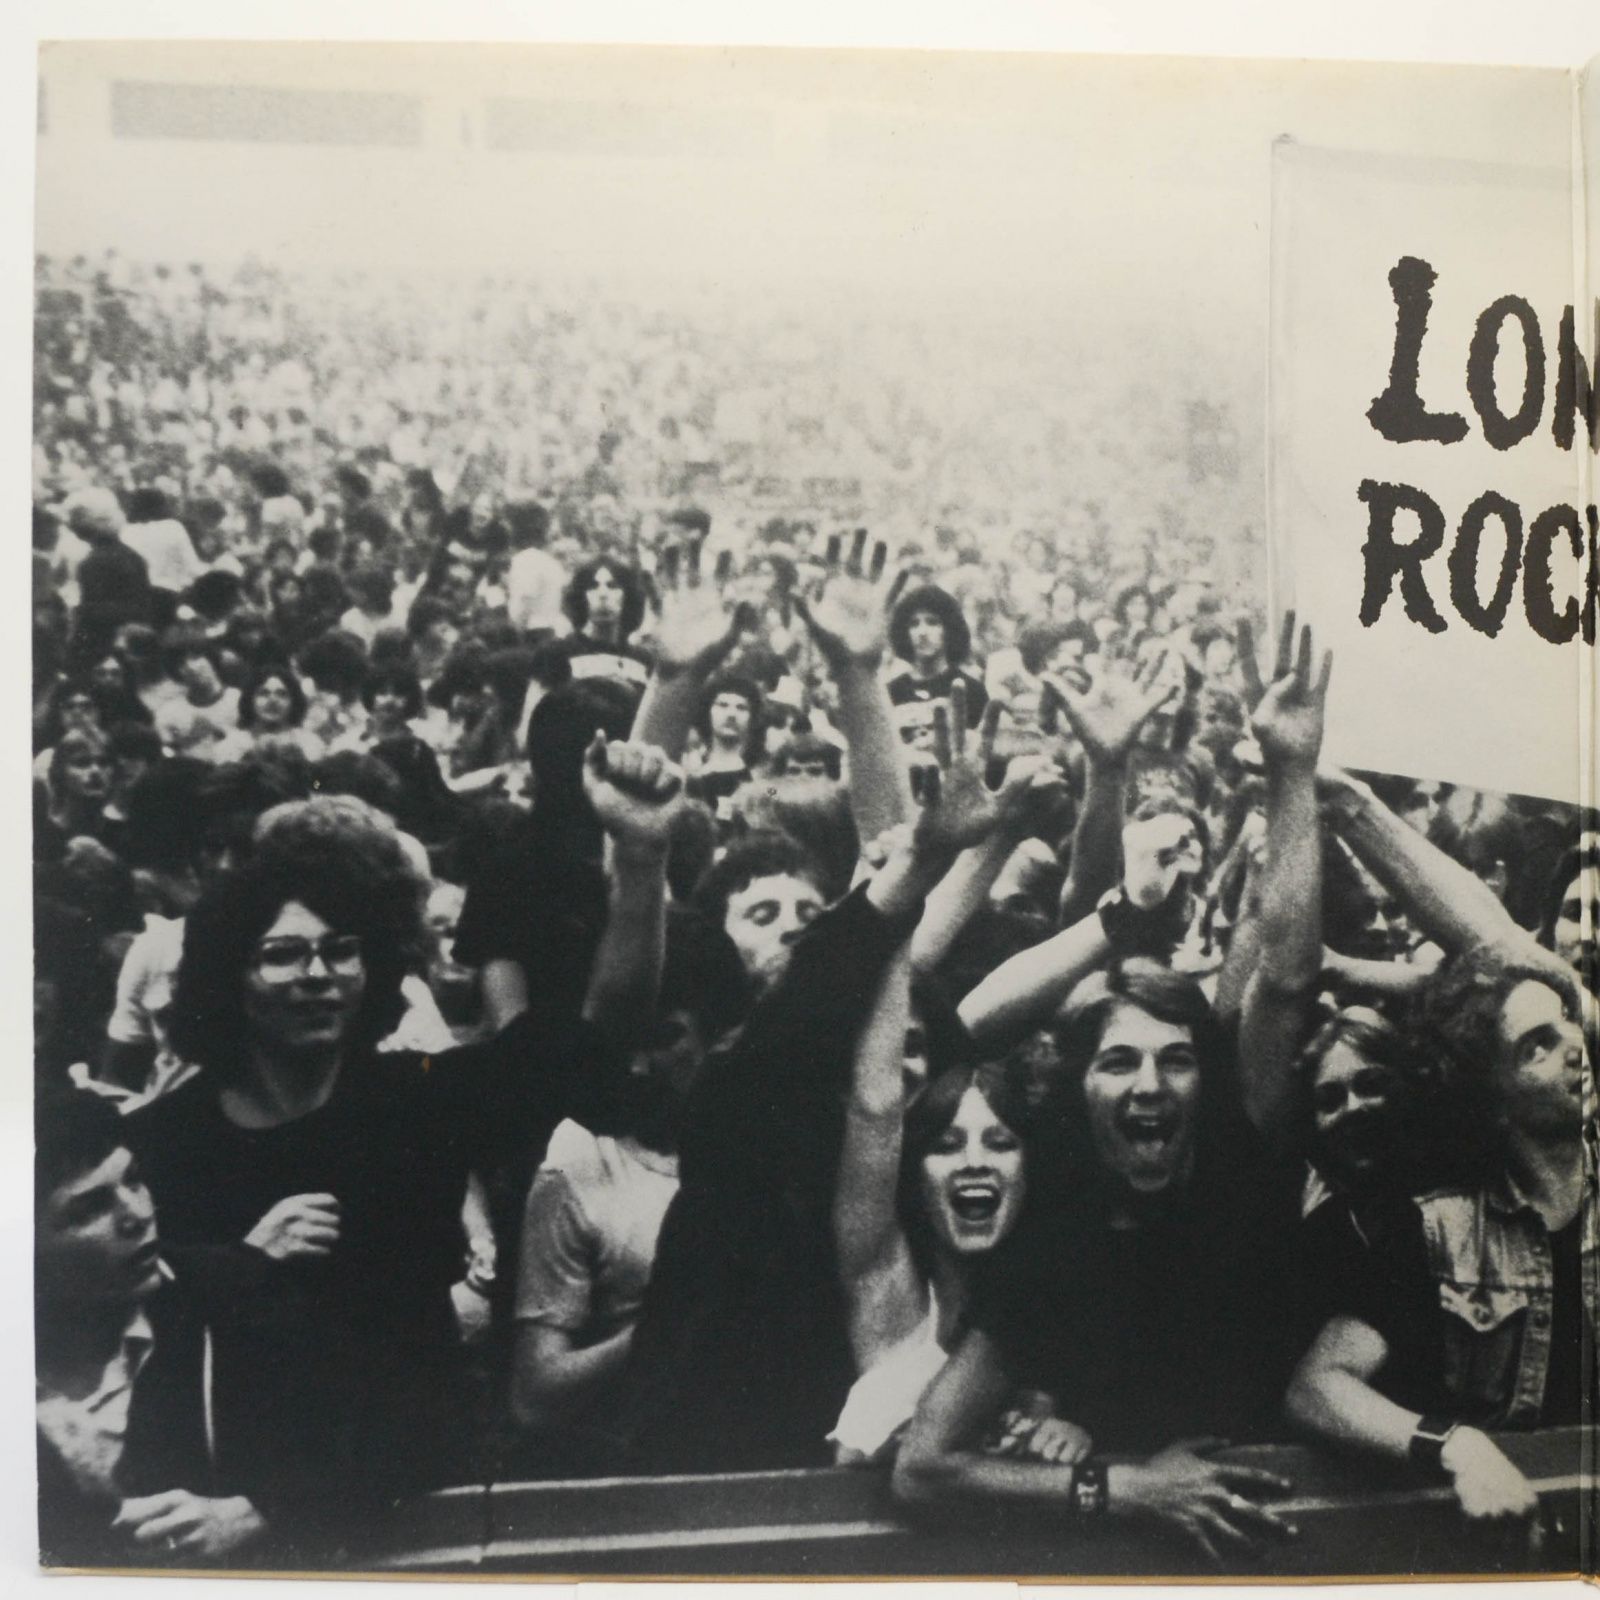 Rainbow — Long Live Rock 'N' Roll, 1978